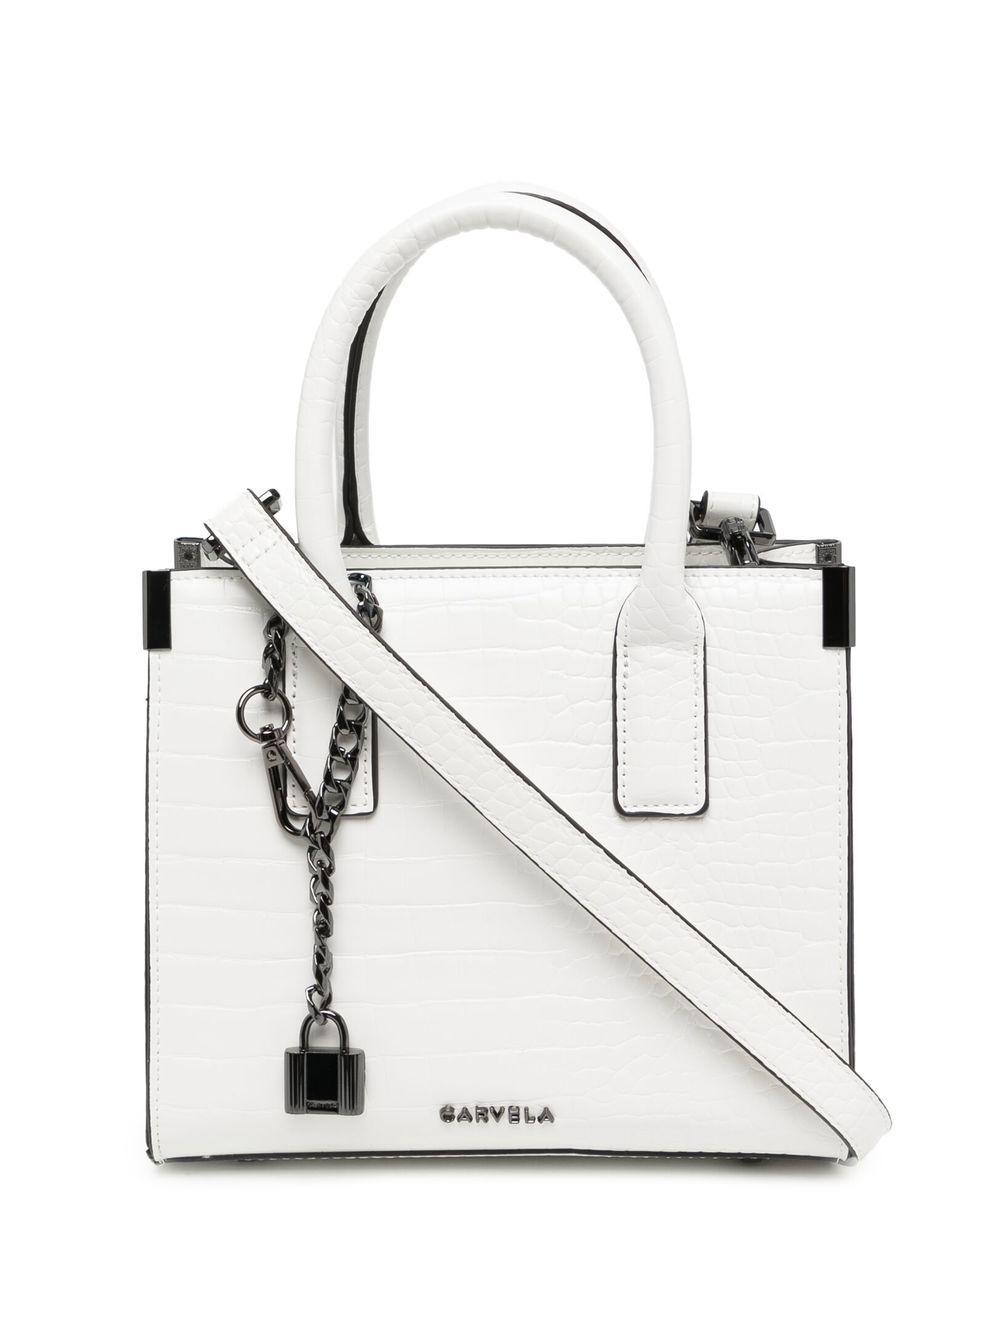 Carvela Kurt Geiger Lock Mini Tote Bag in White | Lyst